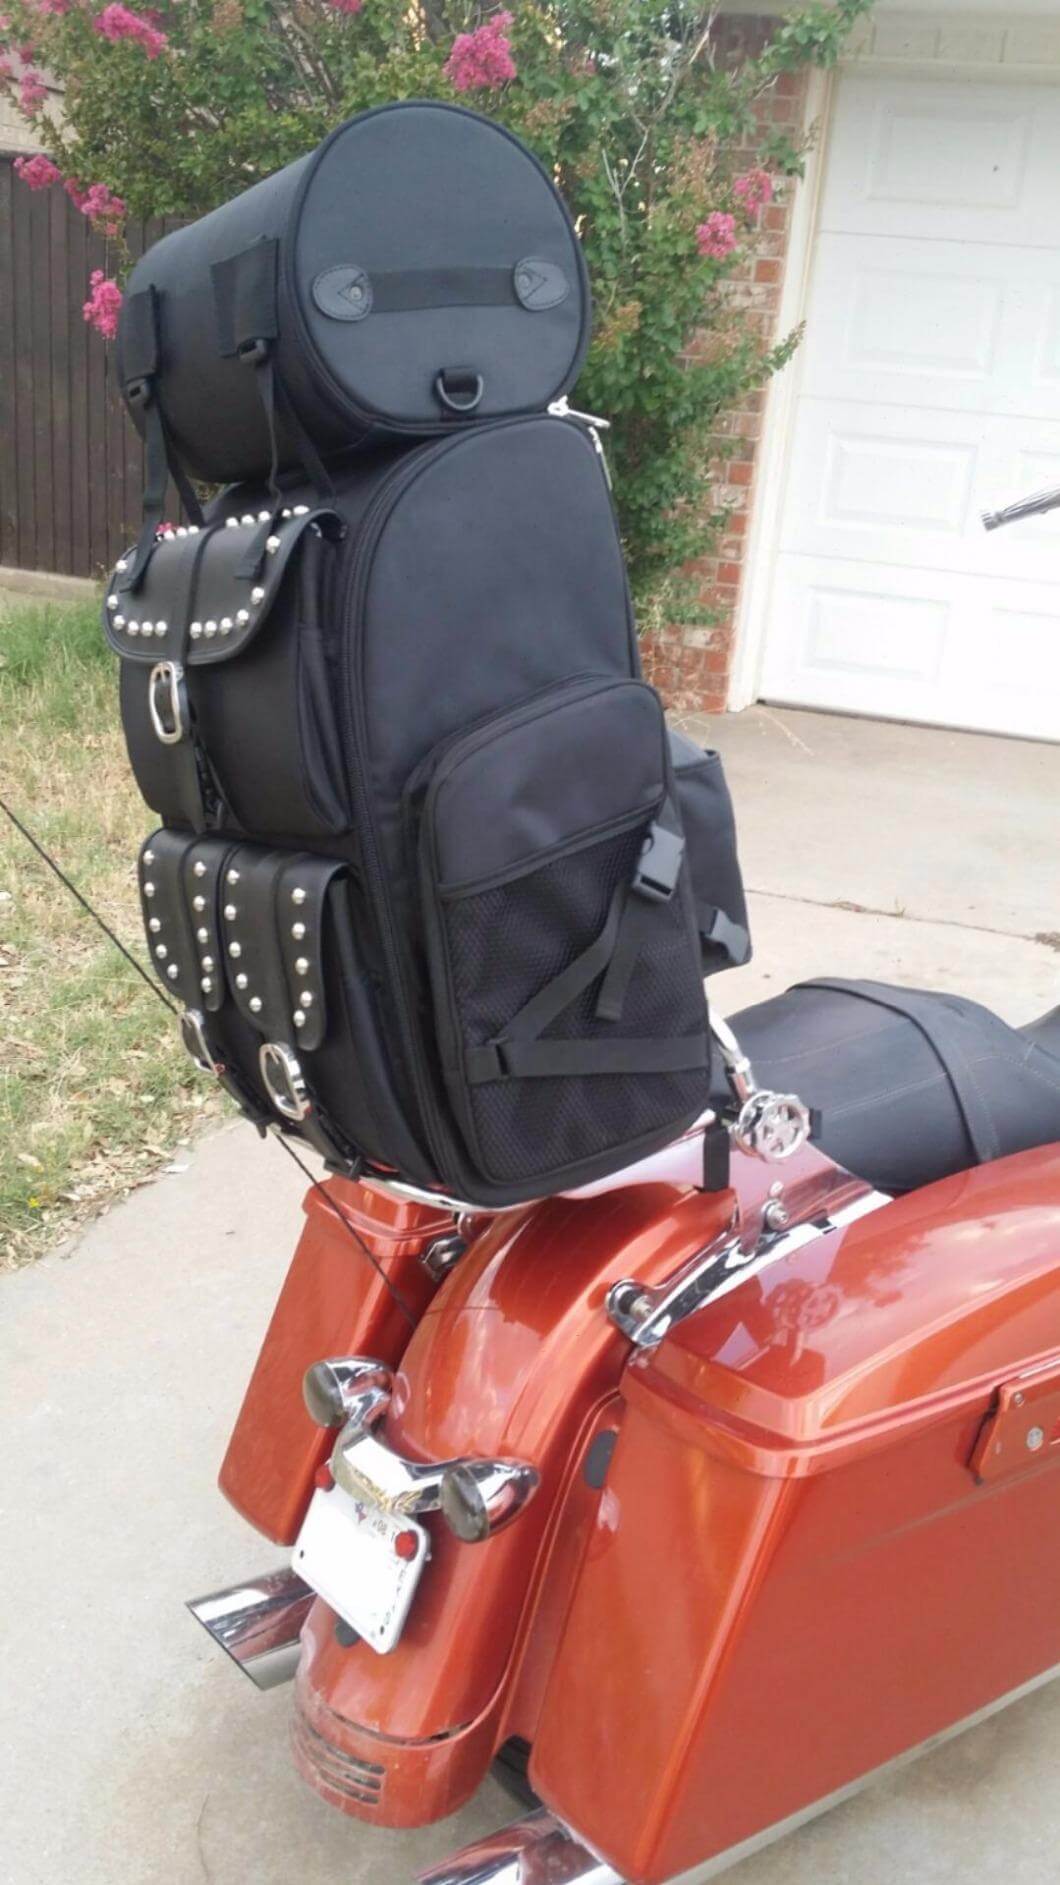 Viking Small Black Backpack For Harley Davidson - Viking Bags